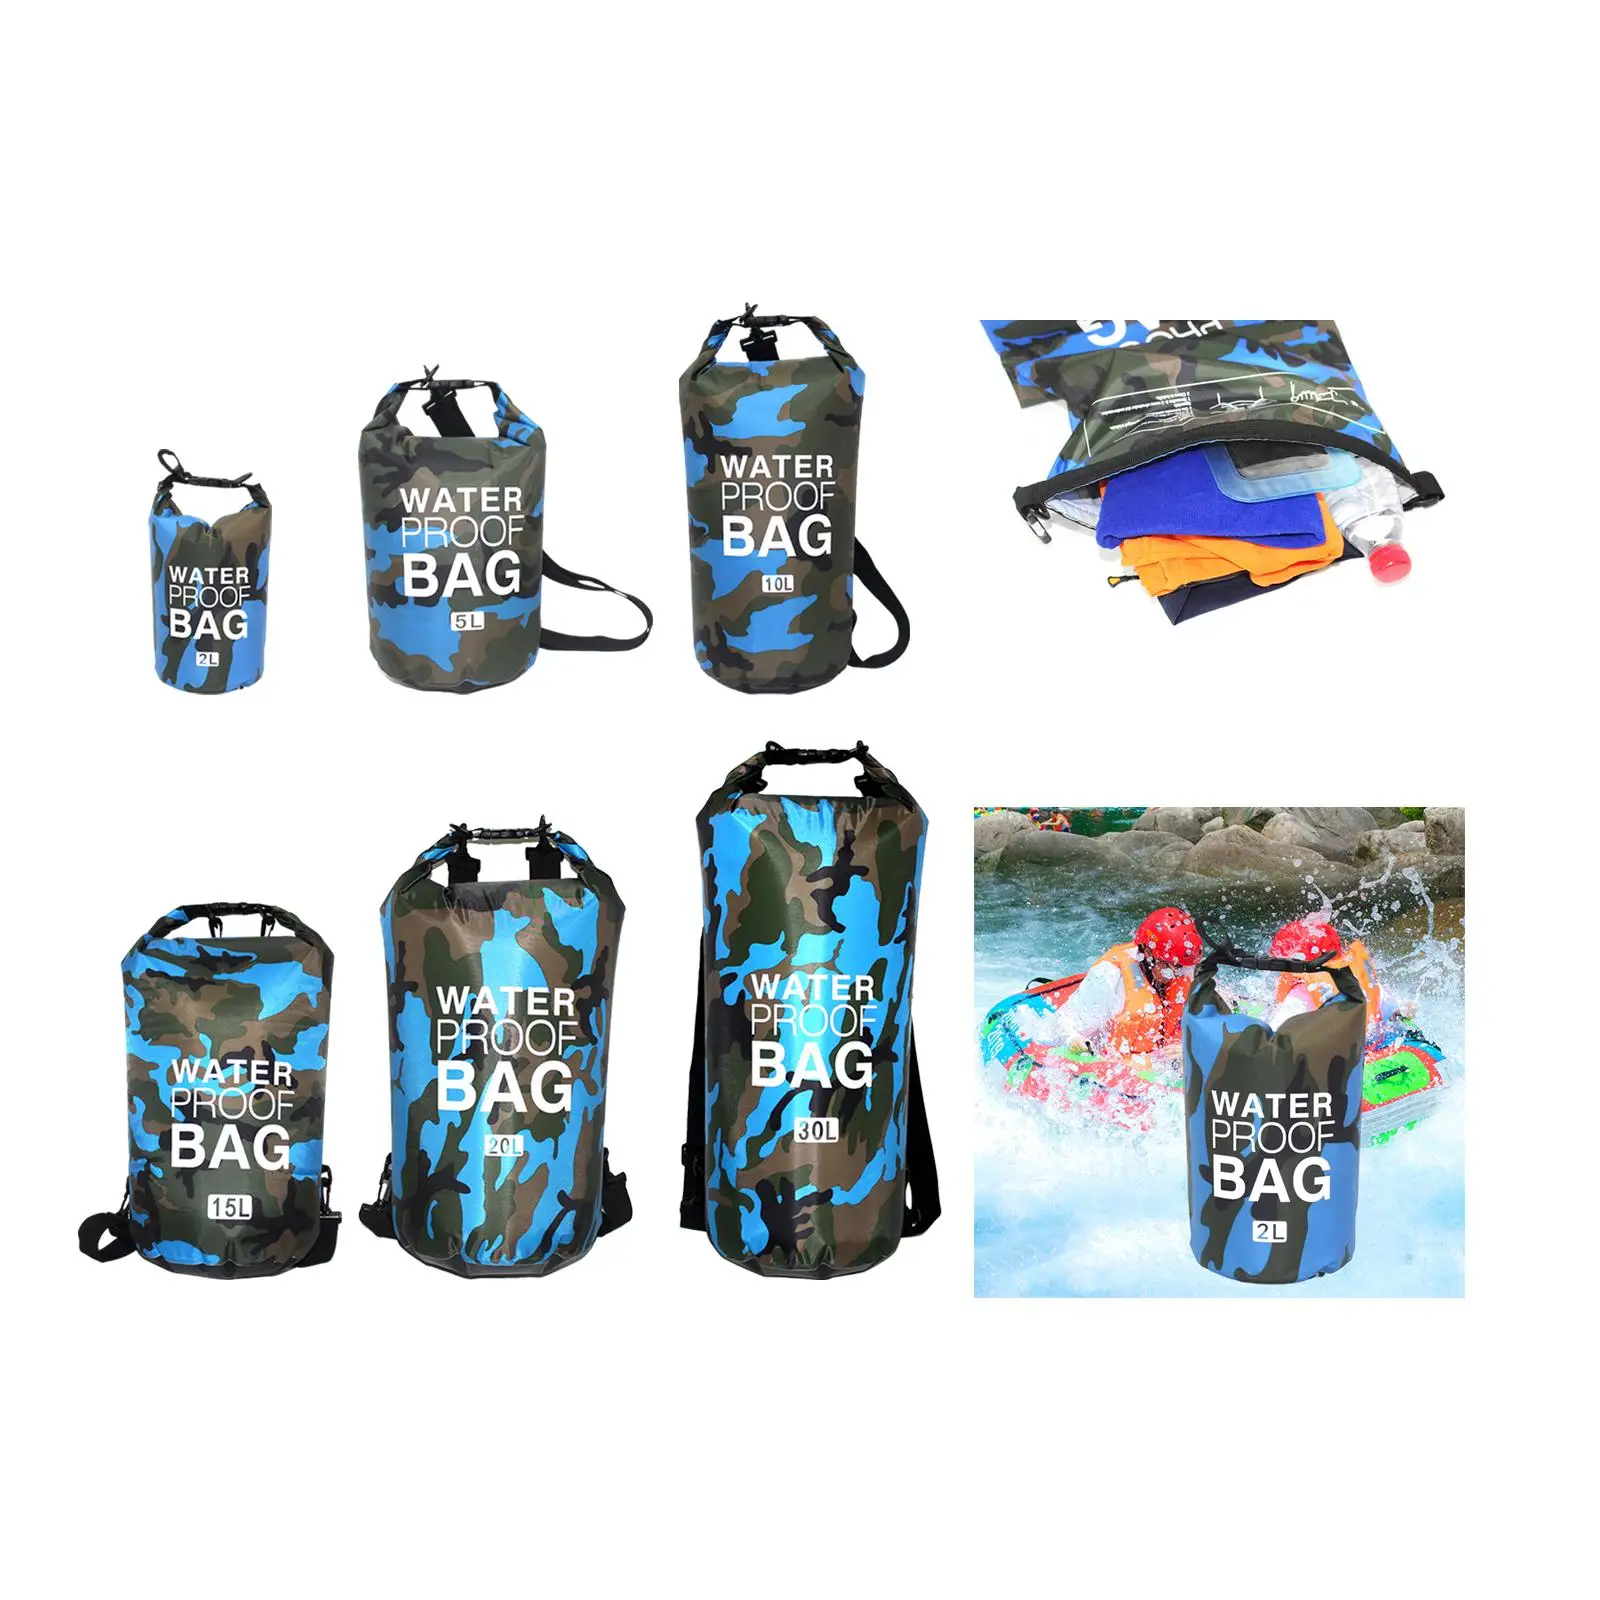 Waterproof Bag, Floating Waterproof Backpack, Roll up Top Rafting Storage Bag with Shoulder Strap for Boating